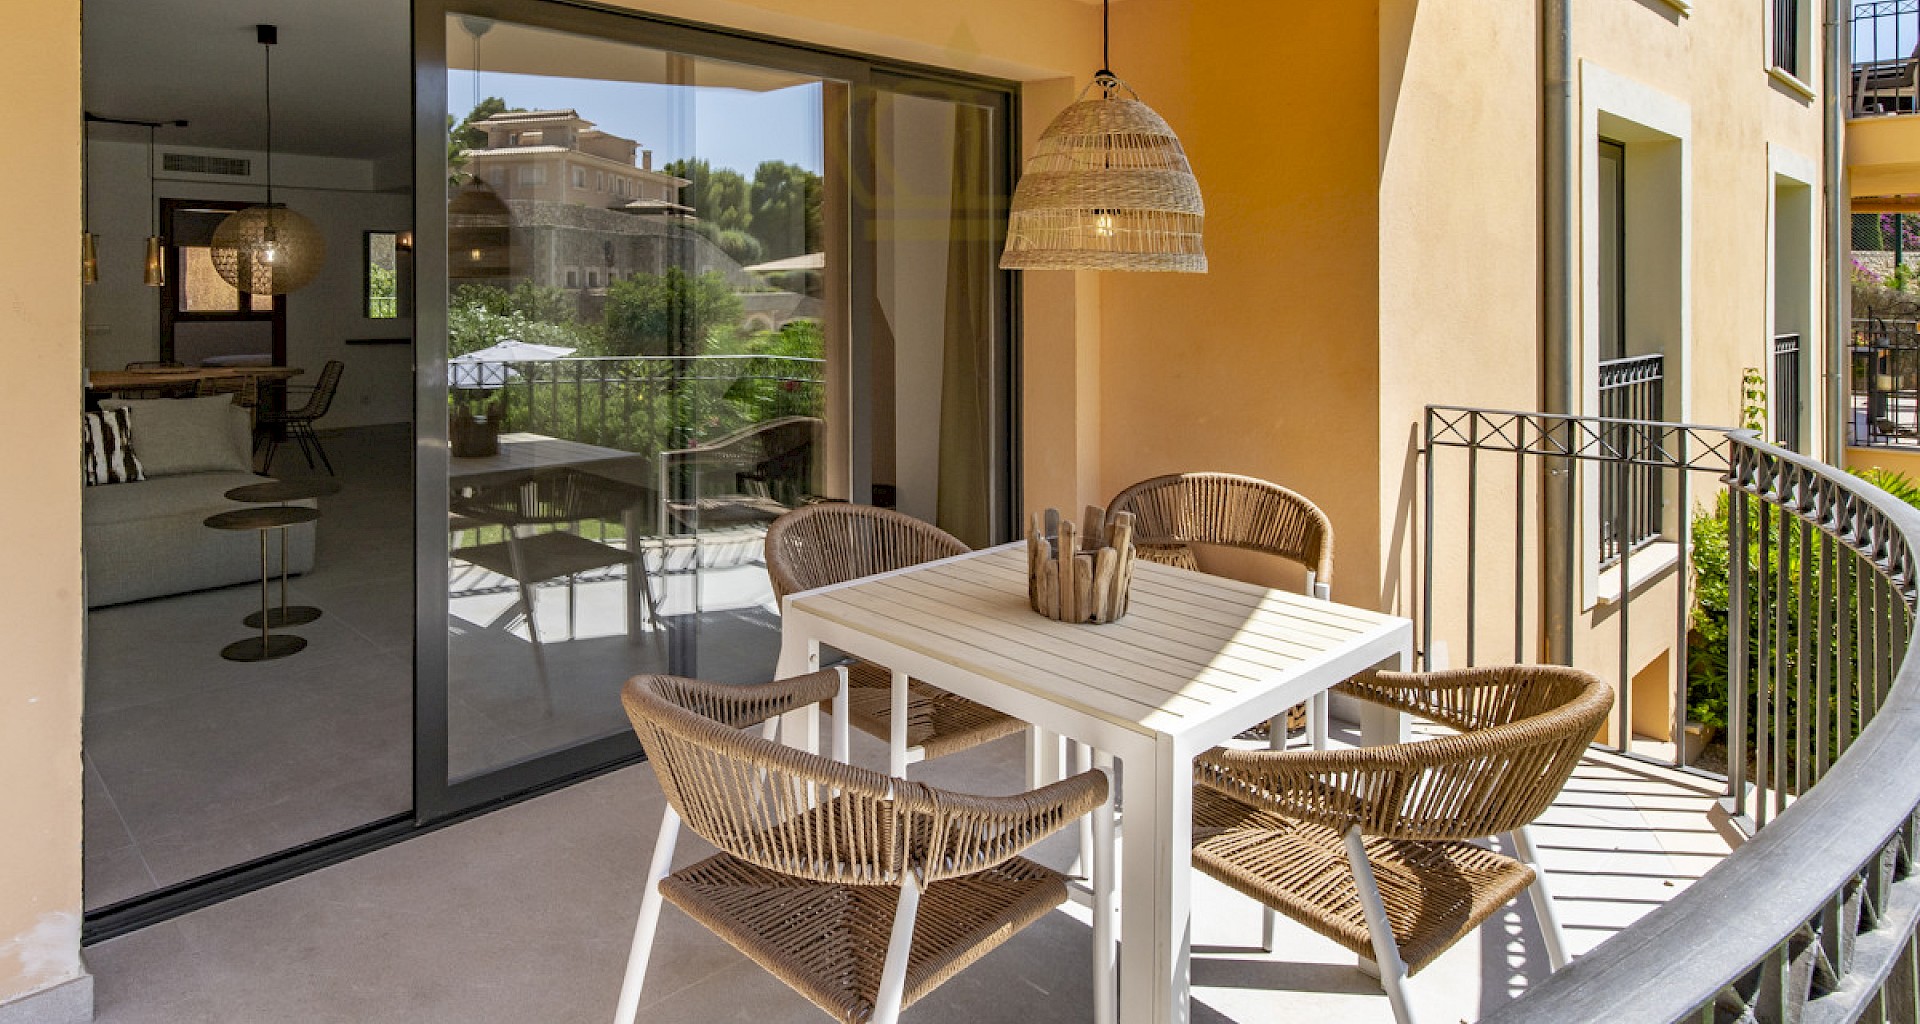 KROHN & LUEDEMANN Modern garden apartment in Camp de Mar with great pool 